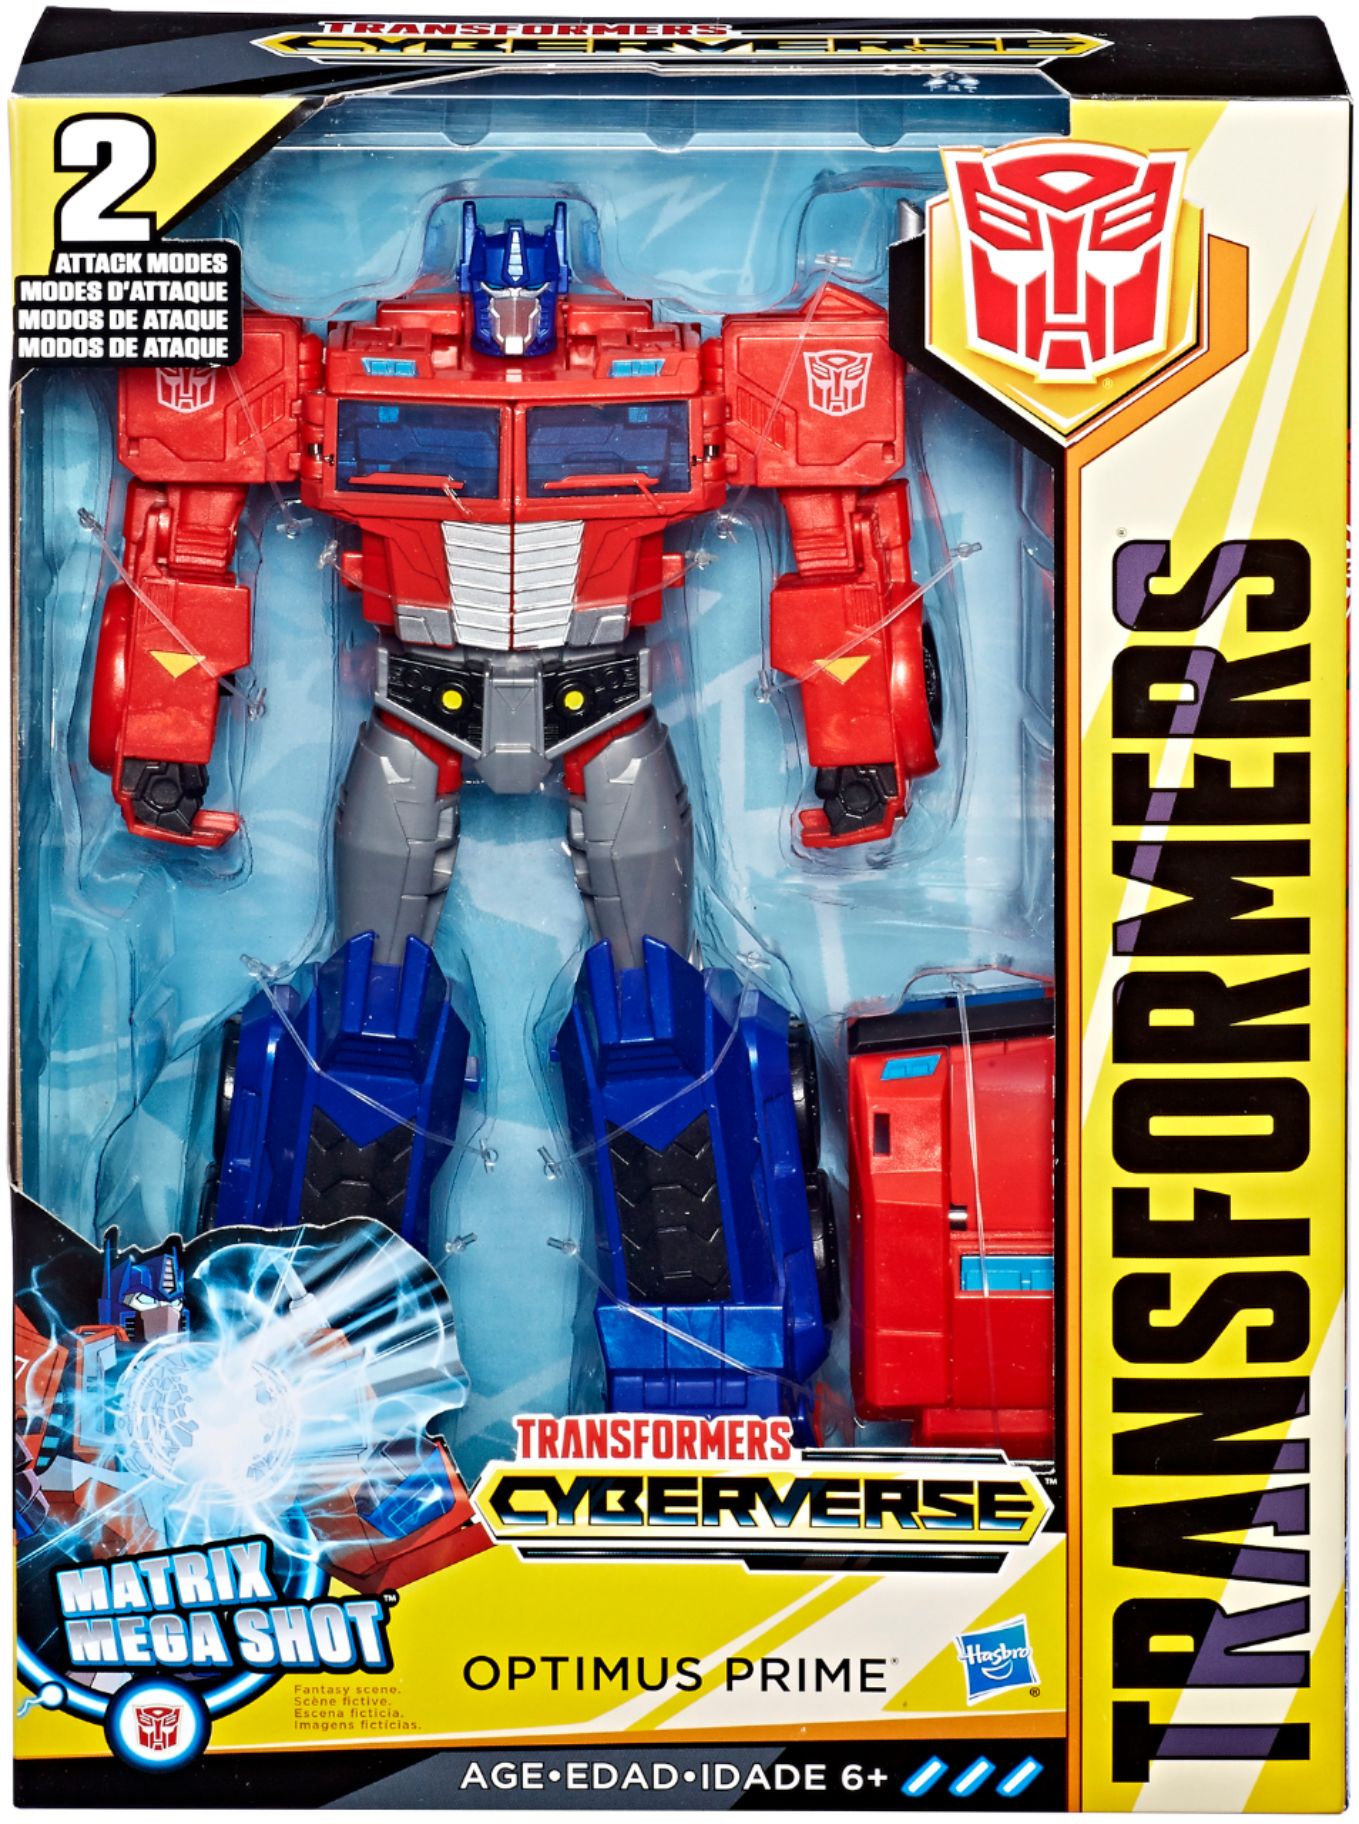 Transformers Cyberverse Ultimate Class 